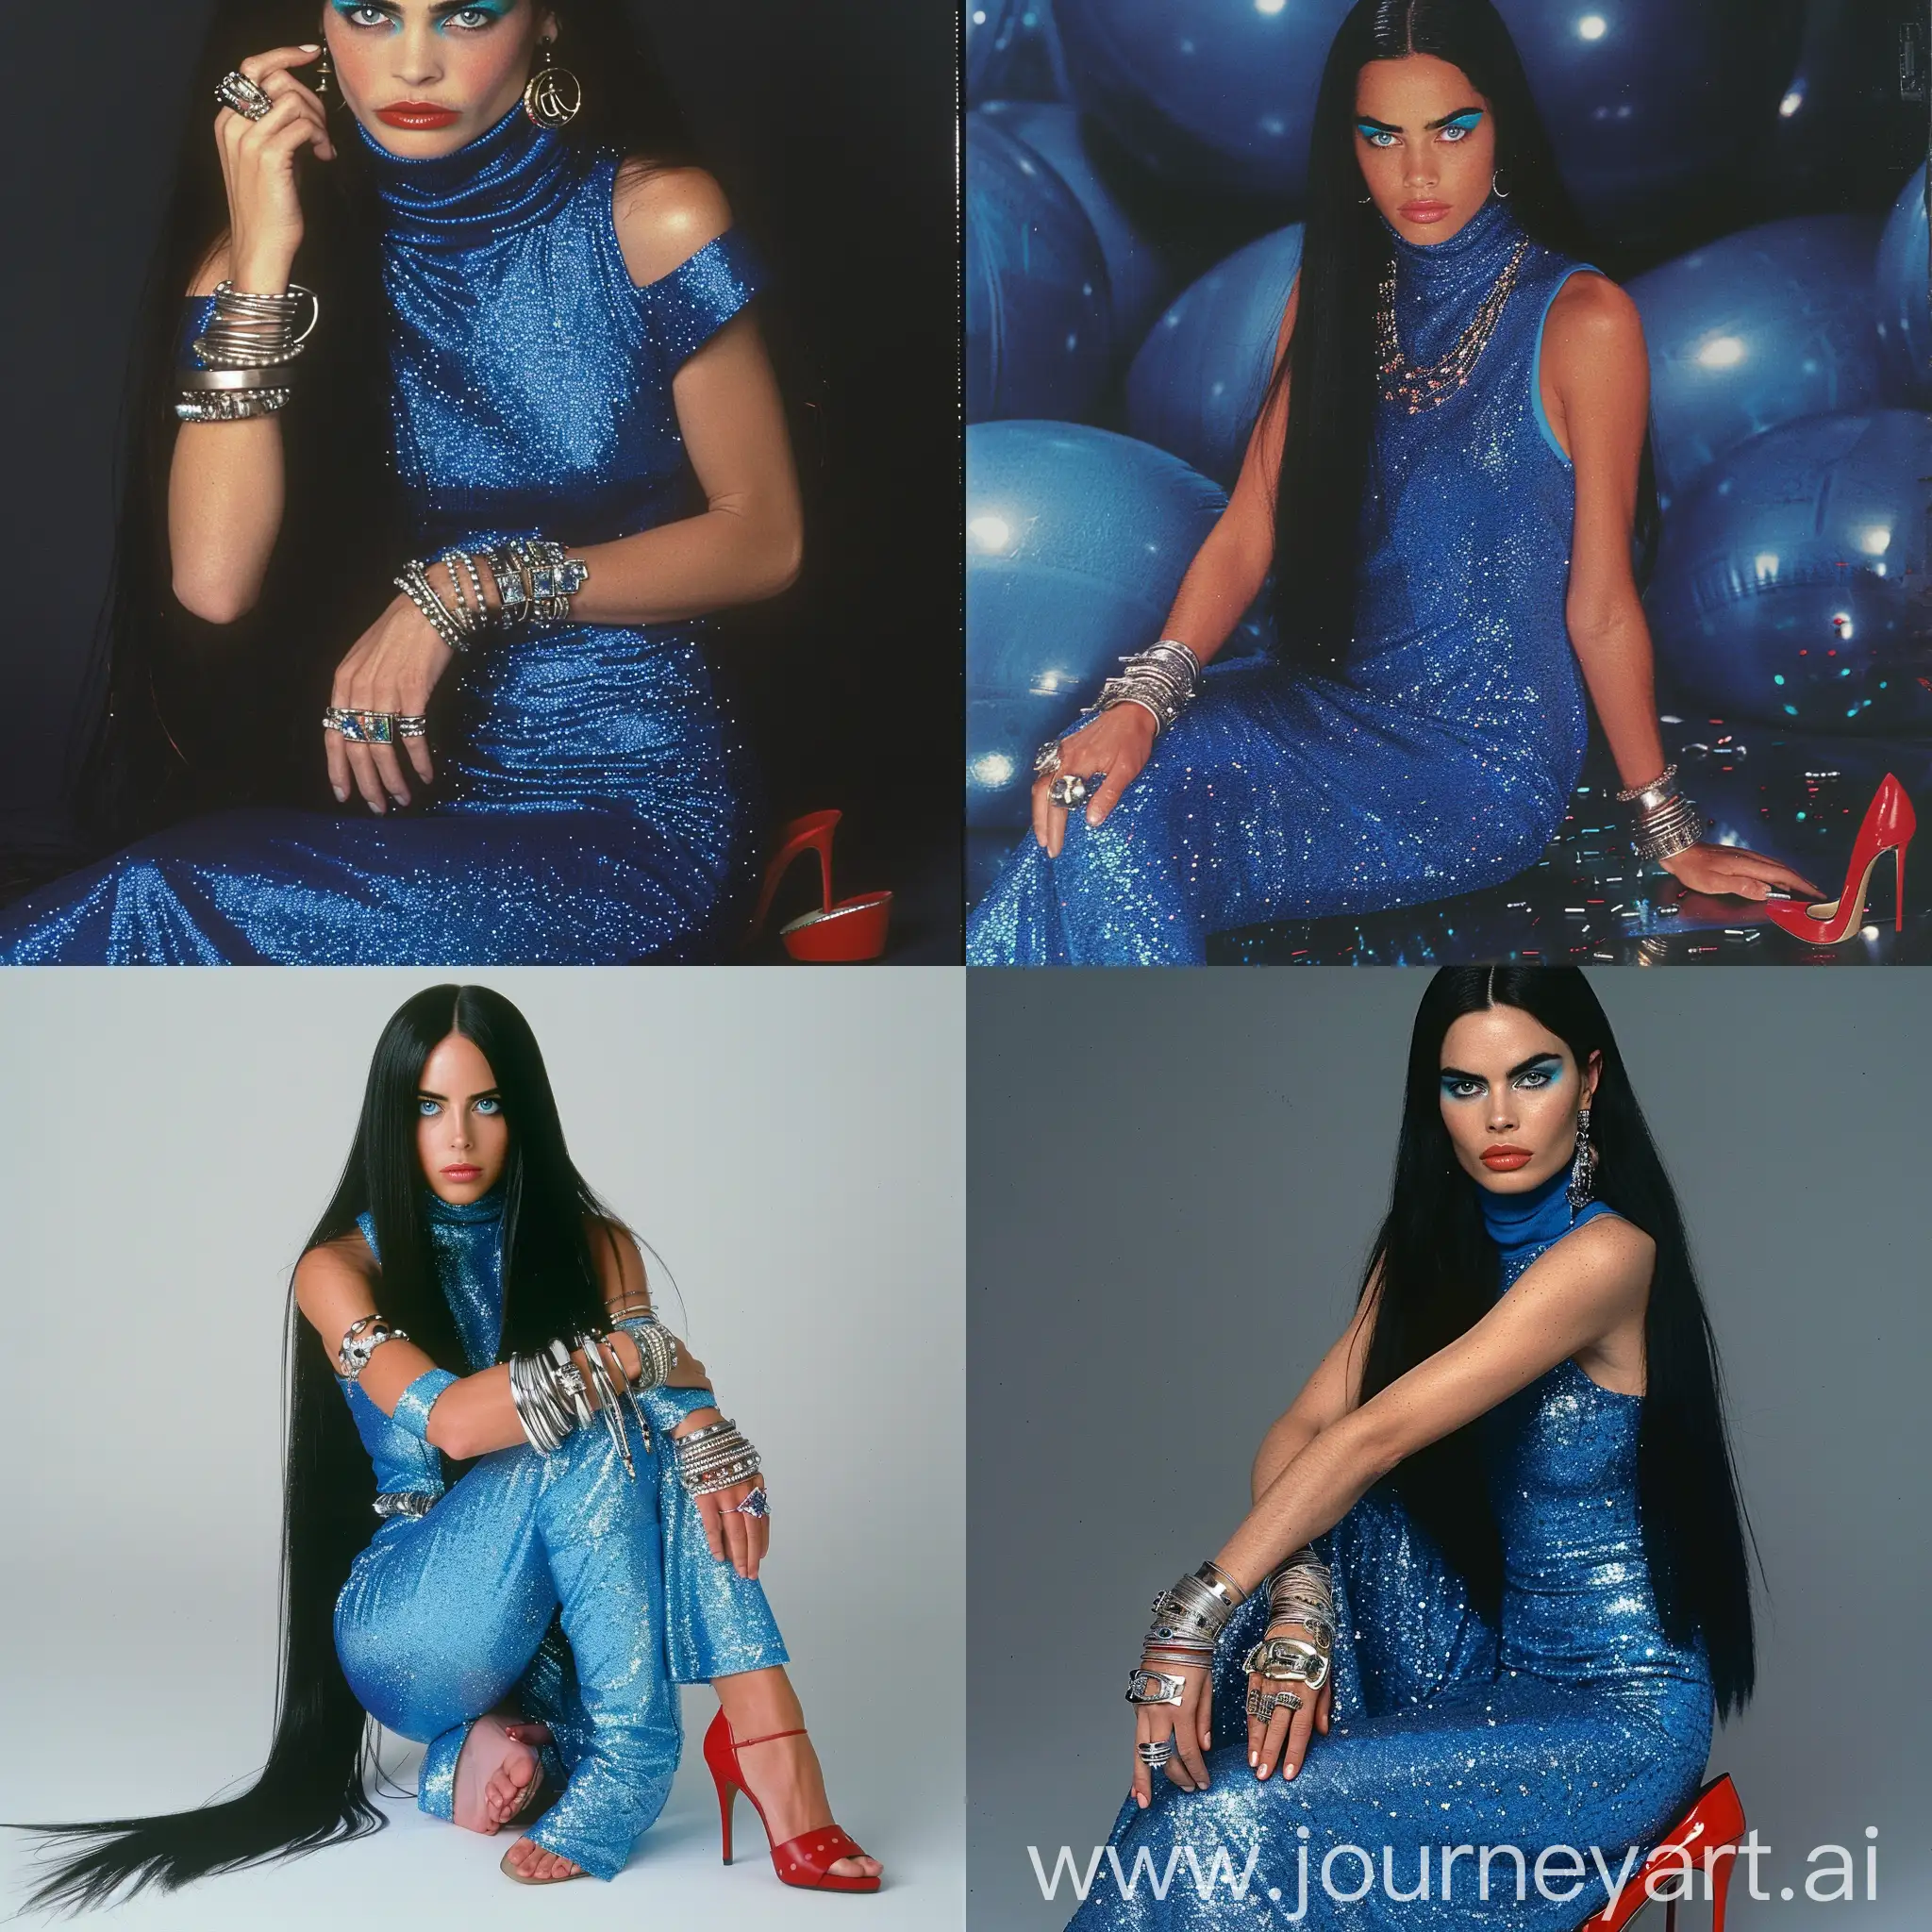 Stylish-1990s-Movieinspired-Fashion-Aqua-Glitter-Dress-and-Red-Heels